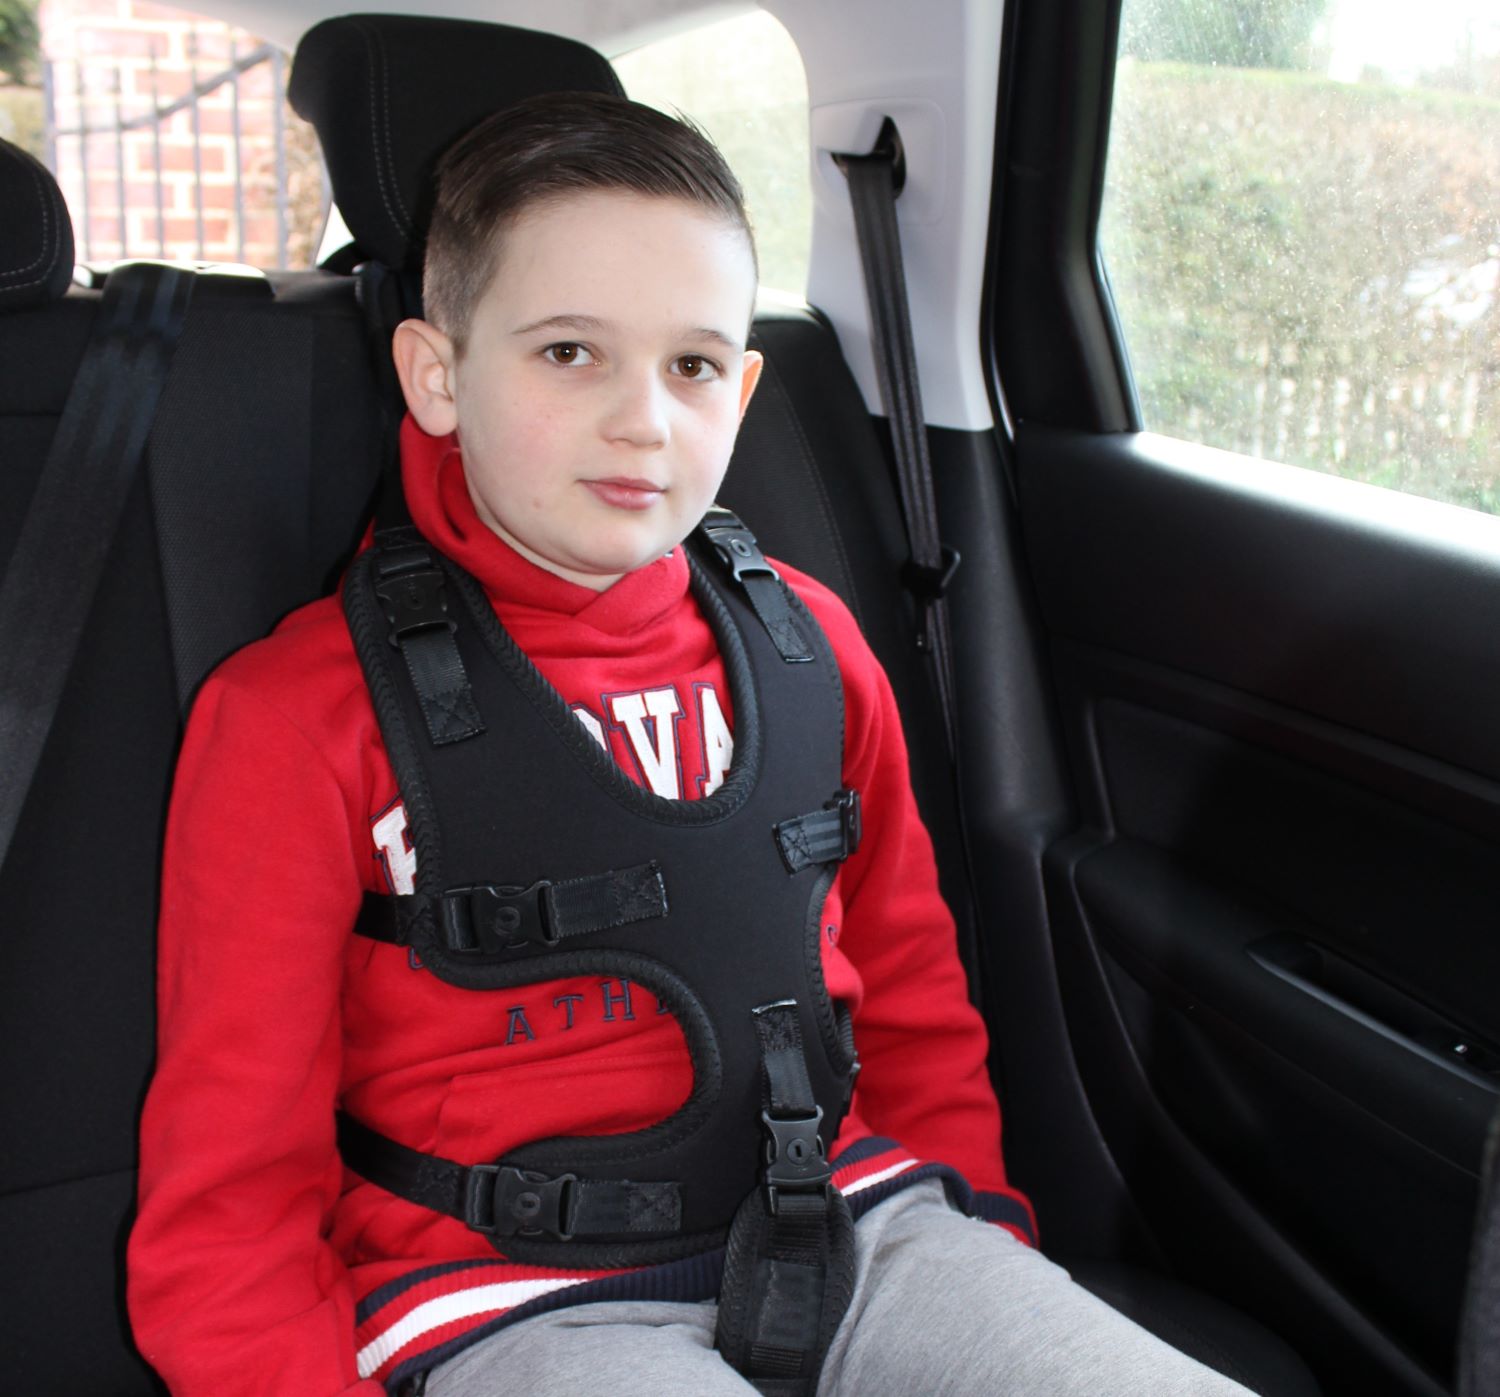 Vehicle harness challenging behaviour autistic children